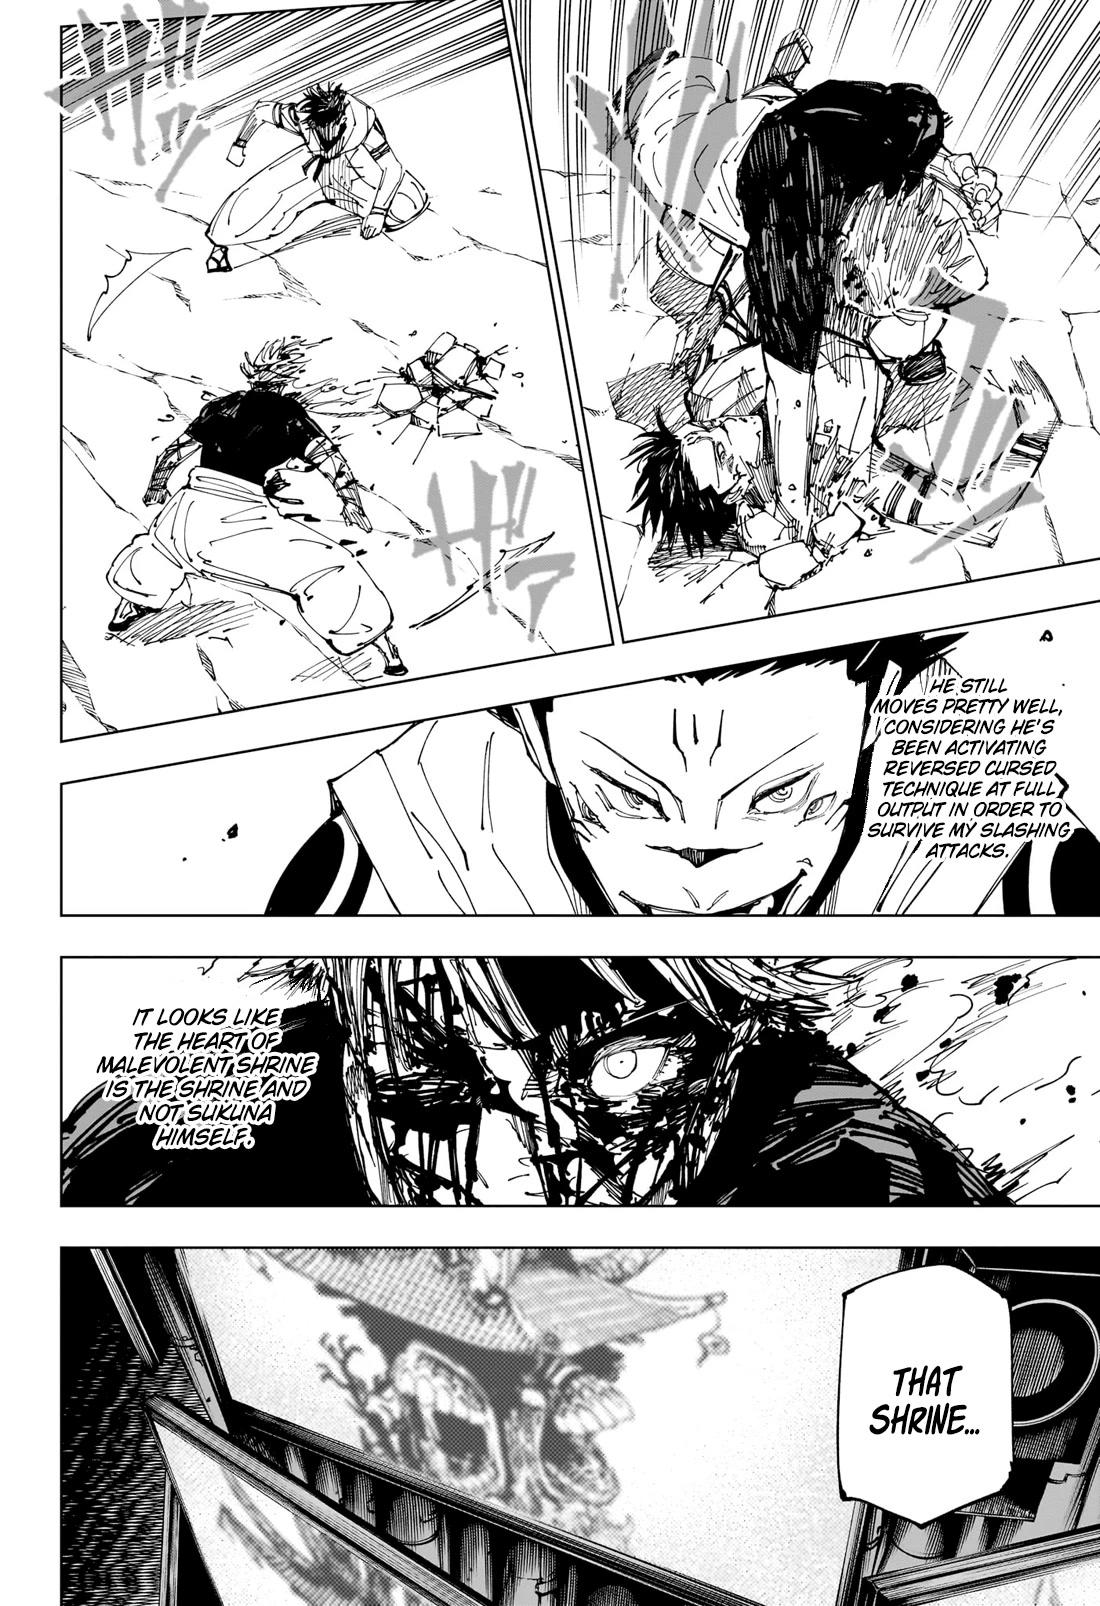 Jujutsu Kaisen Chapter 226: The Decisive Battle In The Uninhabited, Demon-Infested Shinjuku ④ page 8 - Mangakakalot